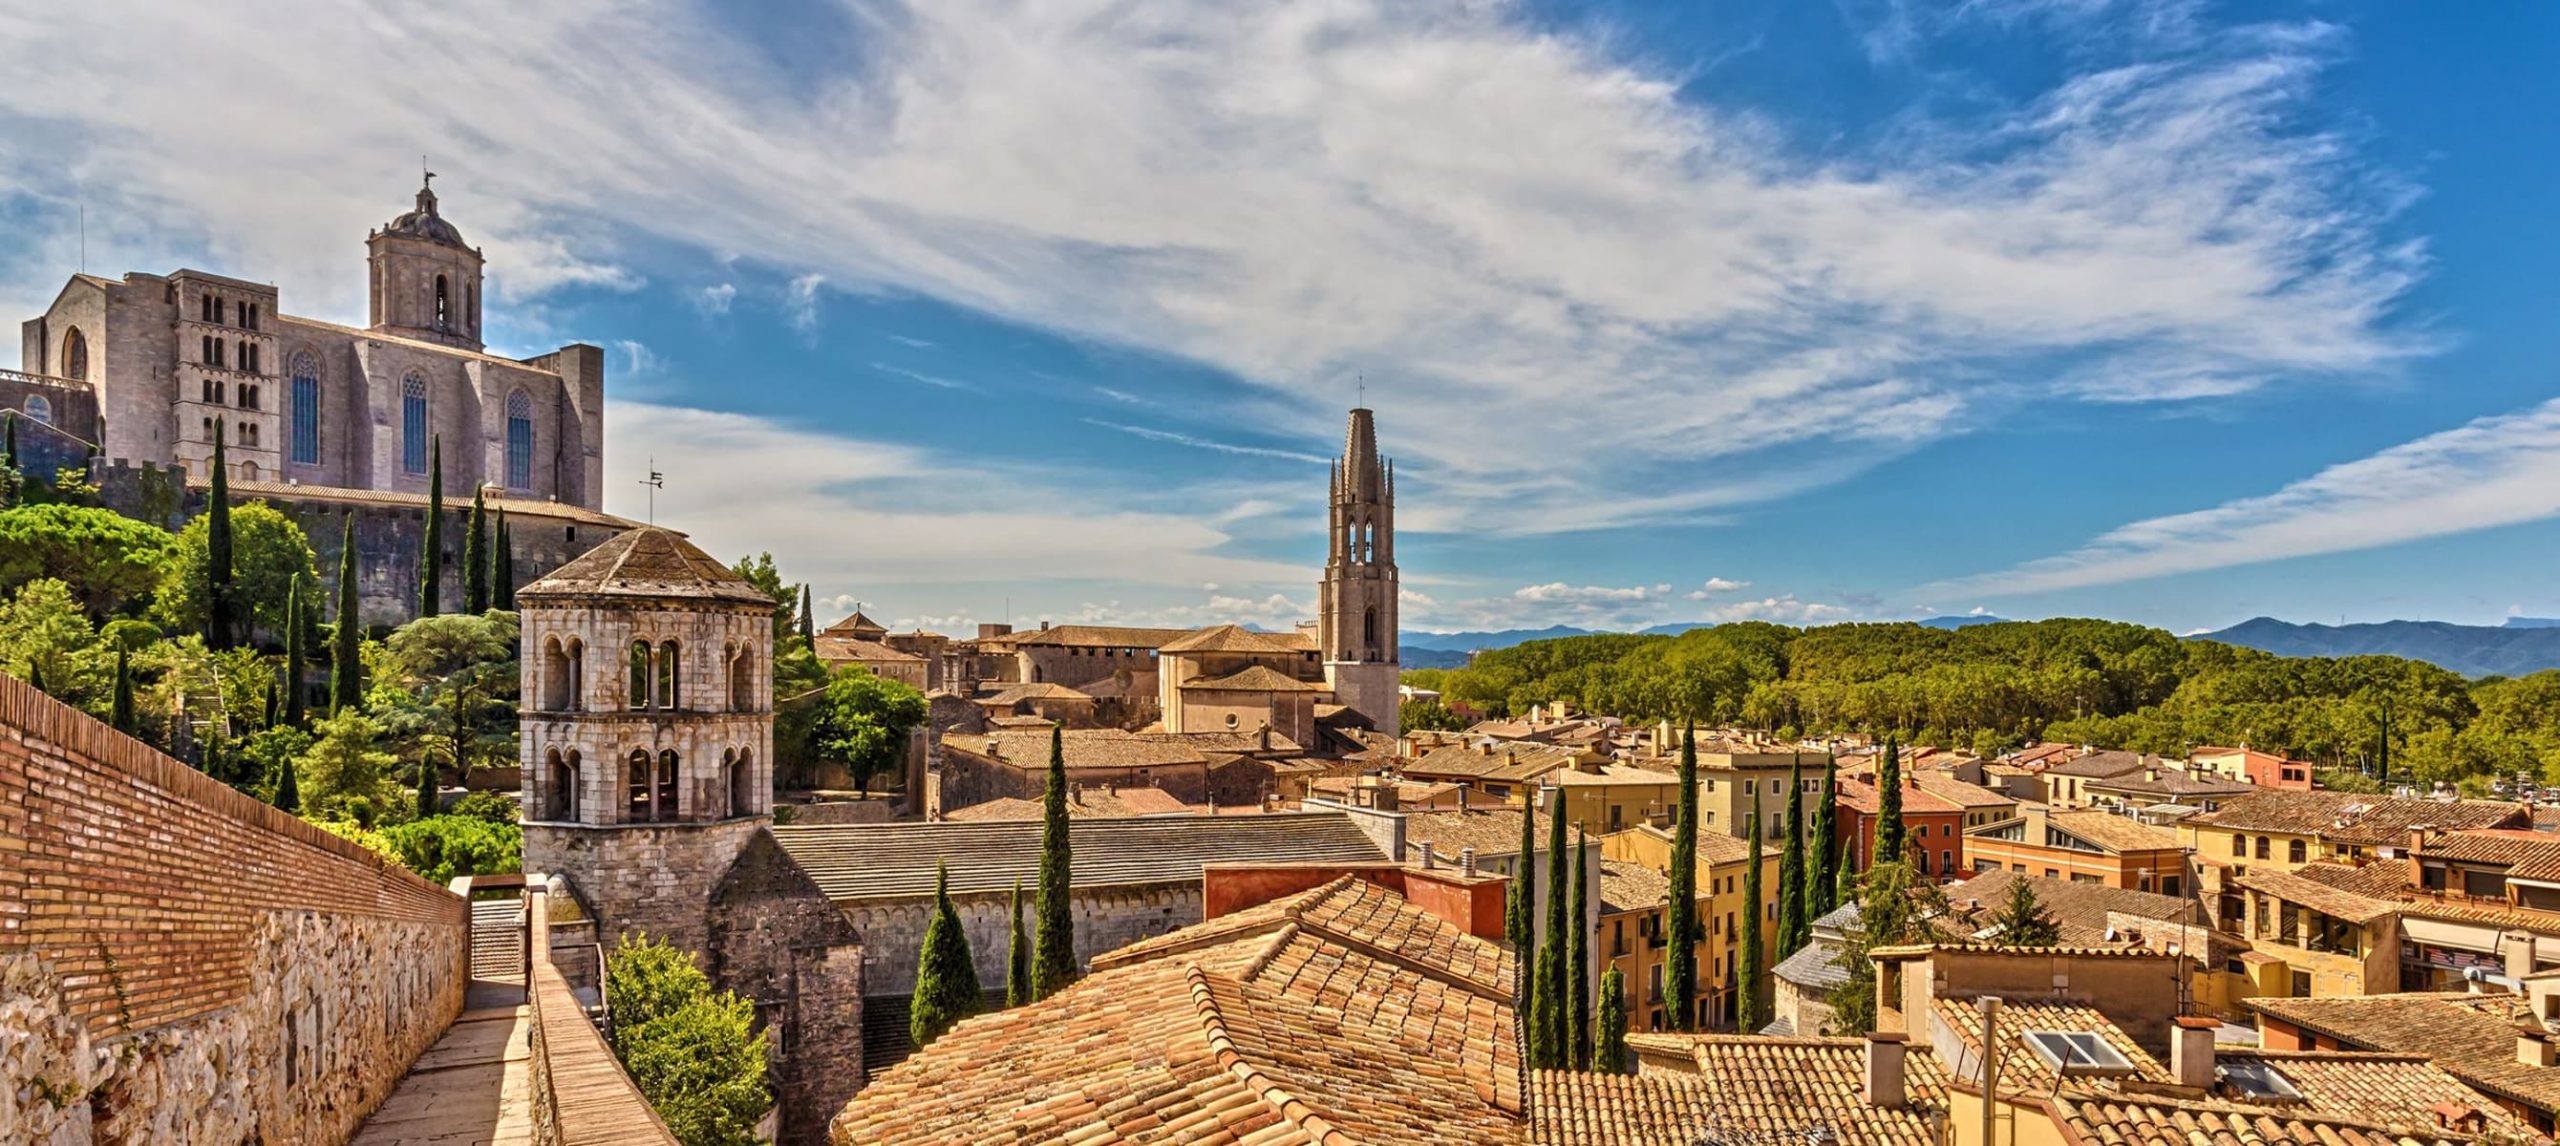 Skyline of Girona, Spain.